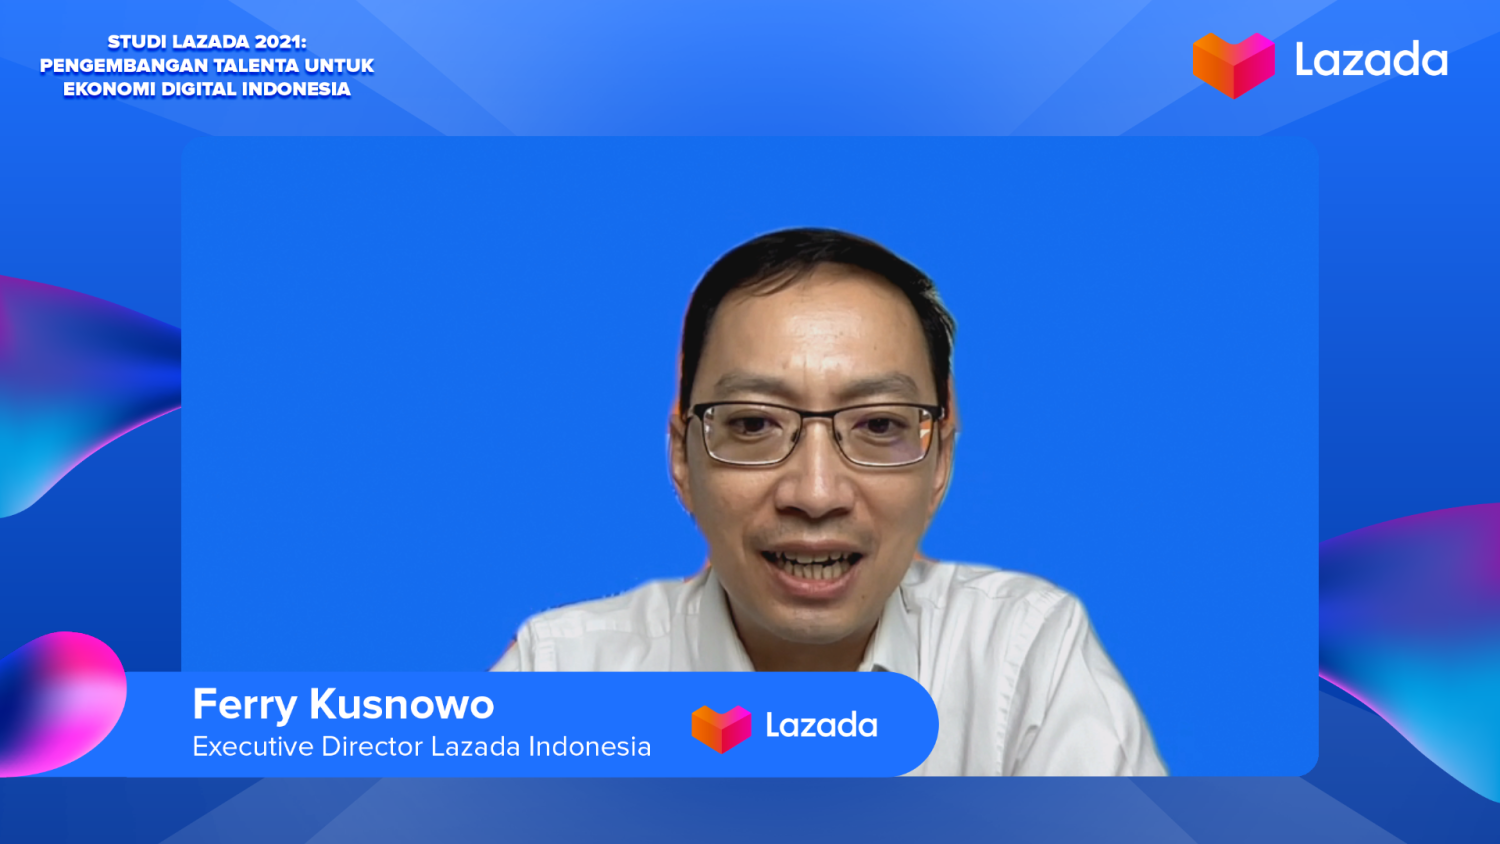 Ferry Kusnowo, Executive Director Lazada Indonesia dalam Diskusi Panel Studi Lazada 2021 